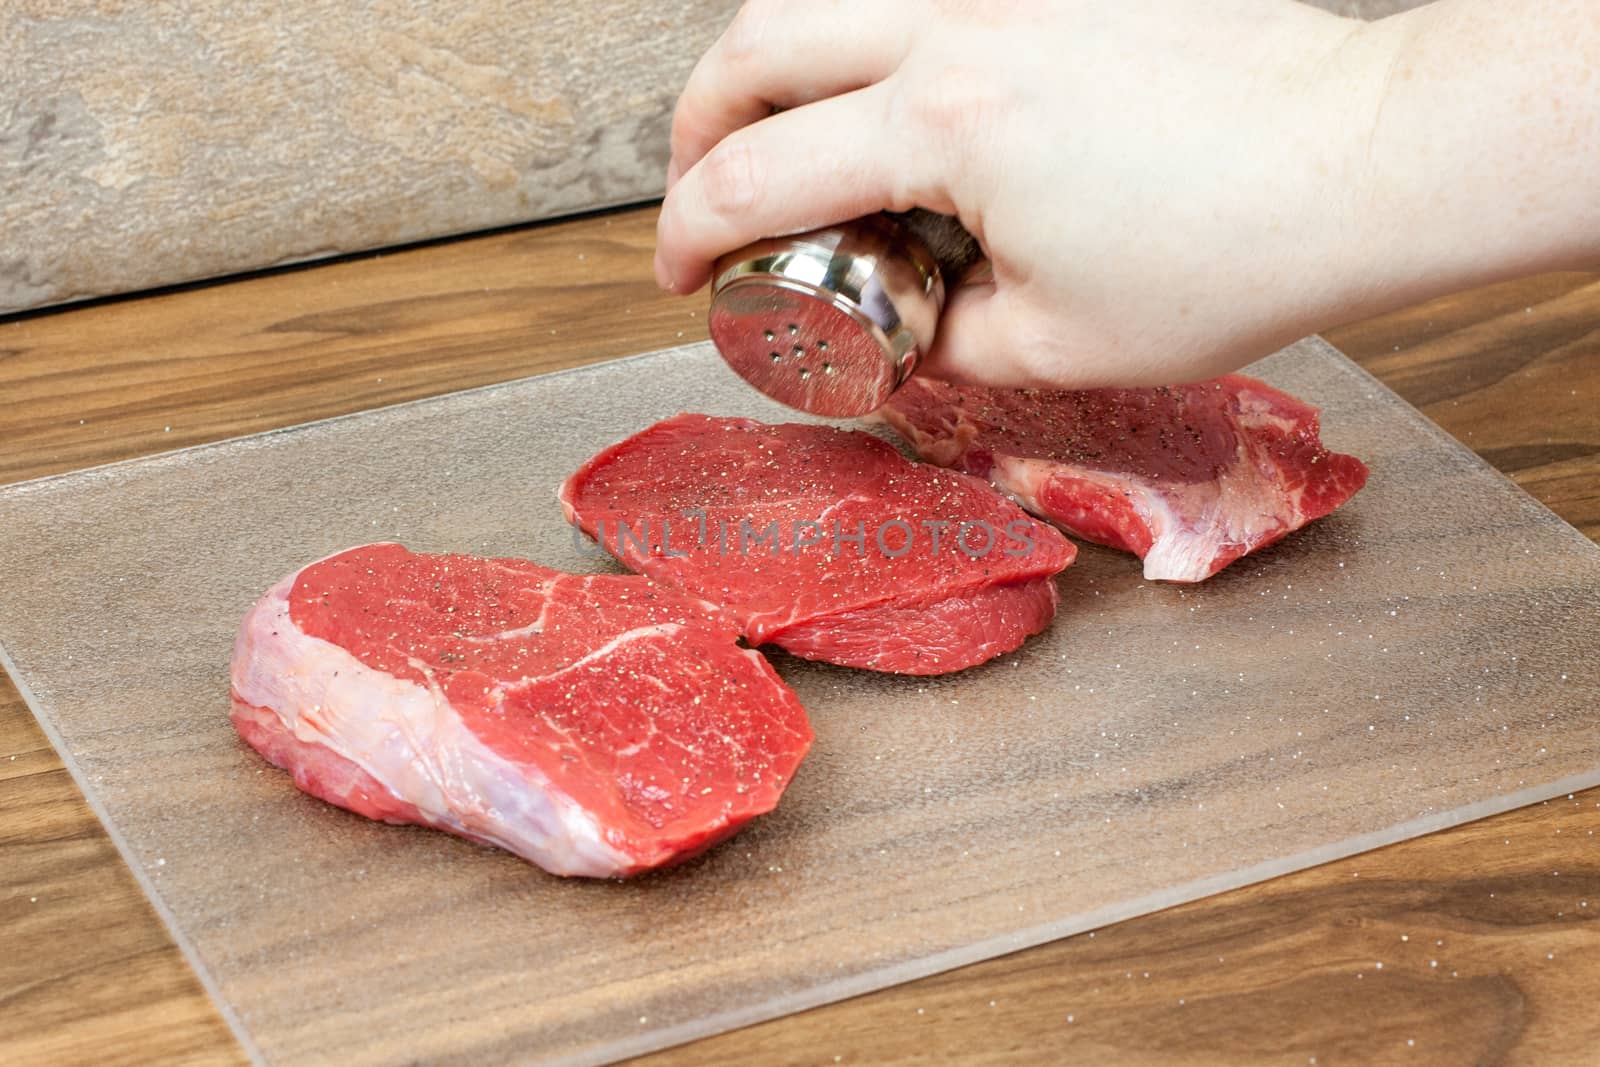 Seasoning fresh steaks with salt a pepper before cooking